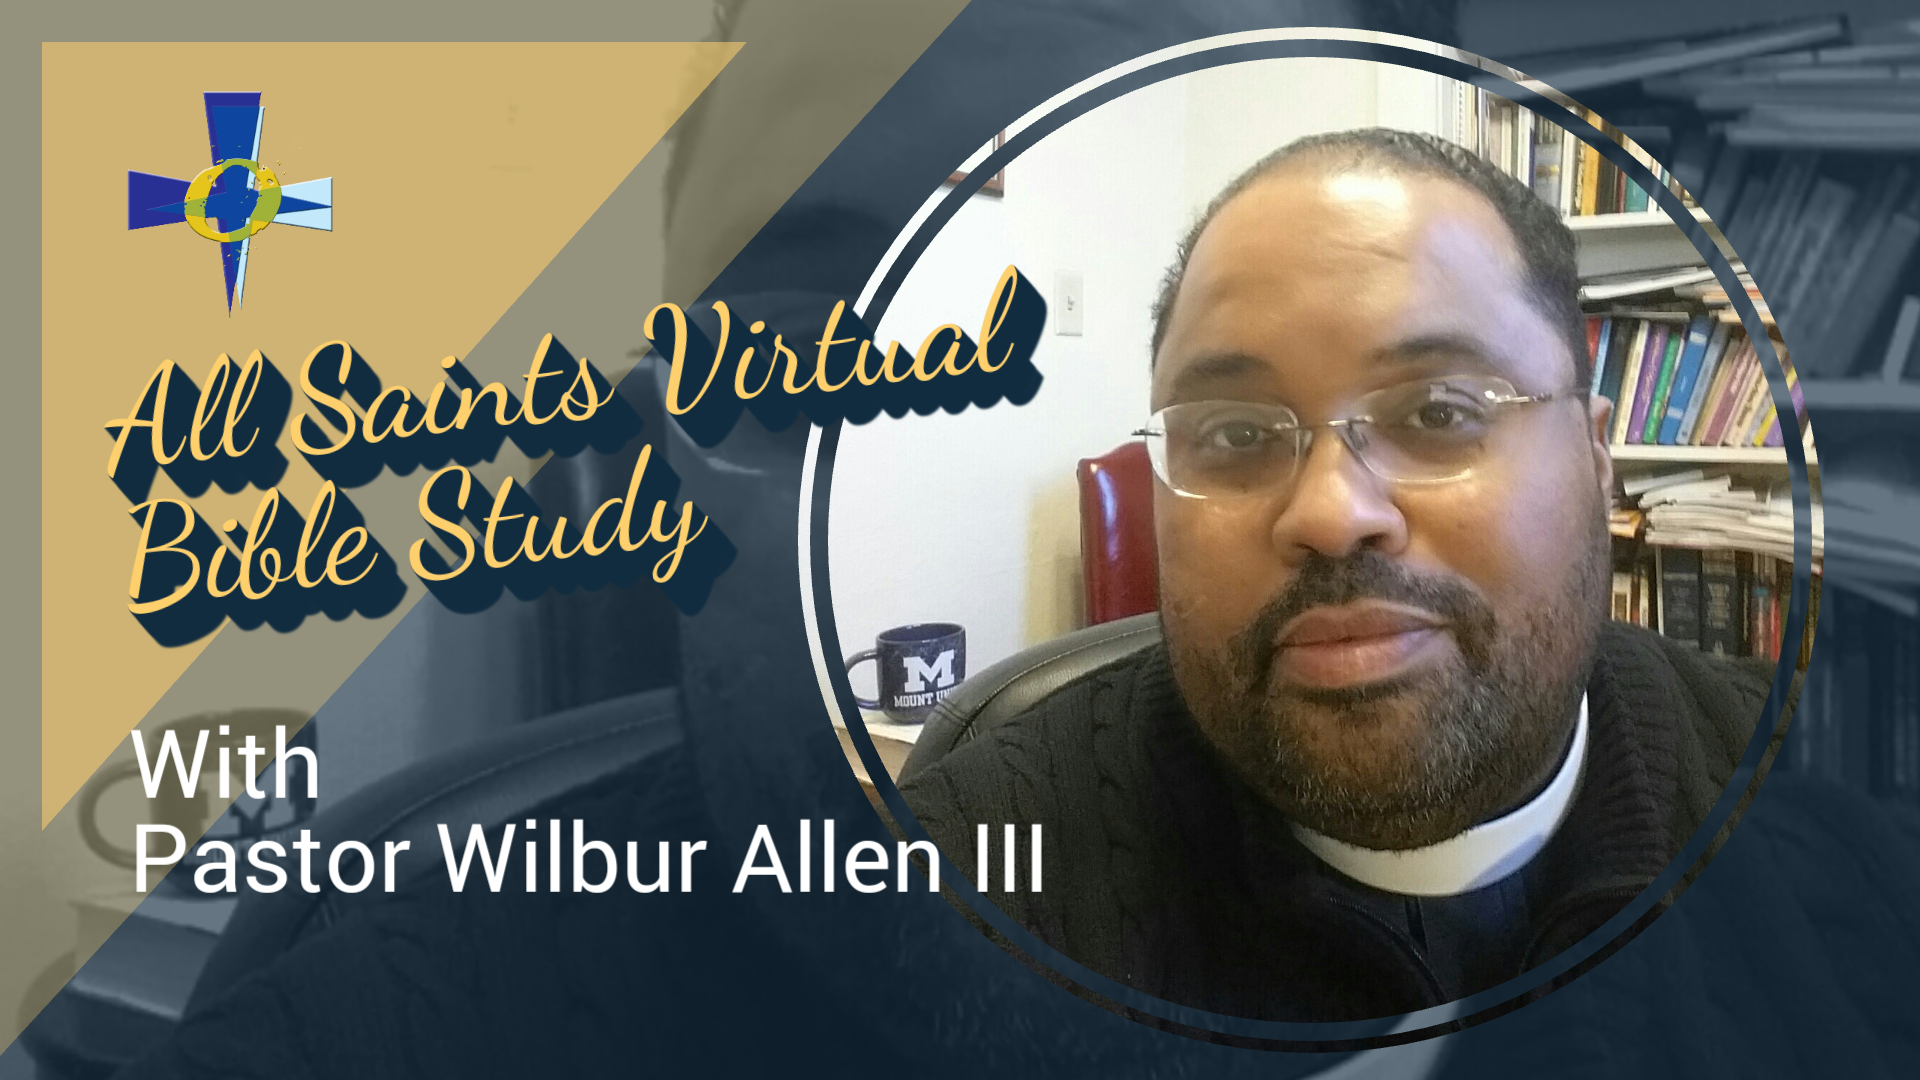 All Saints Virtual Bible Study - Discern Your Seasons